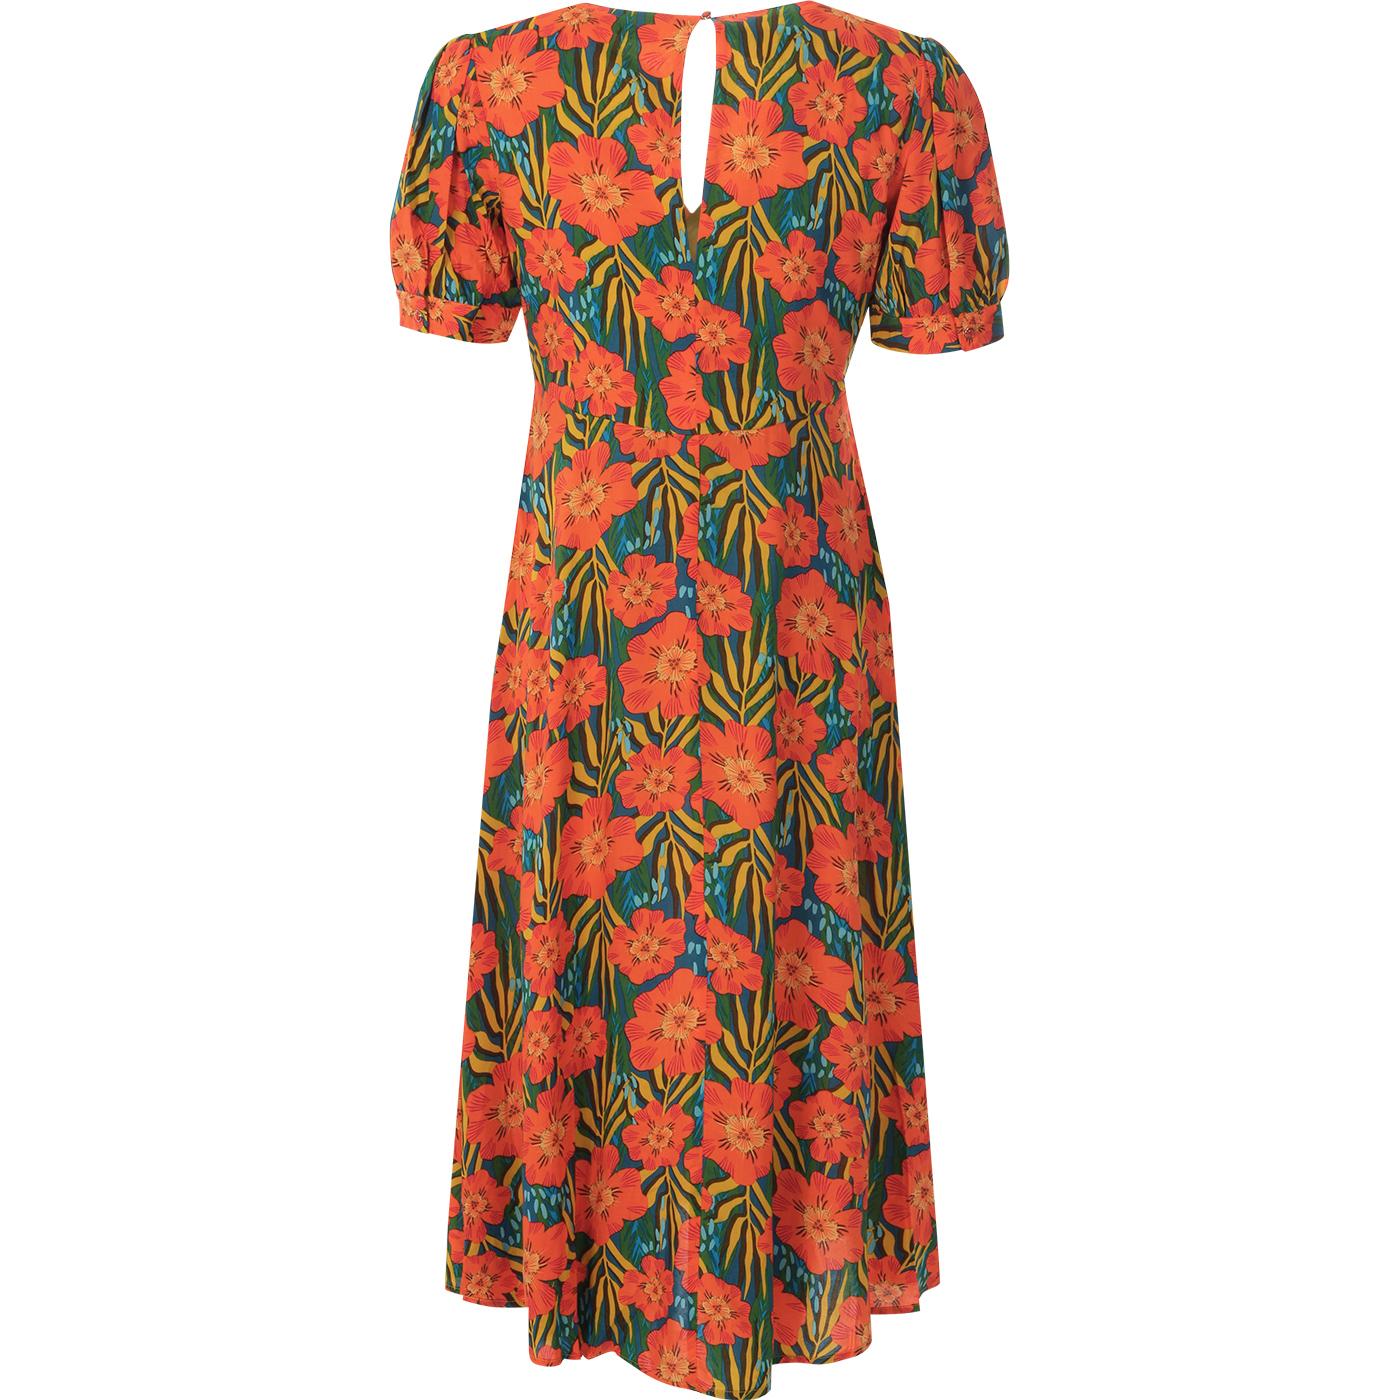 70s flower dress